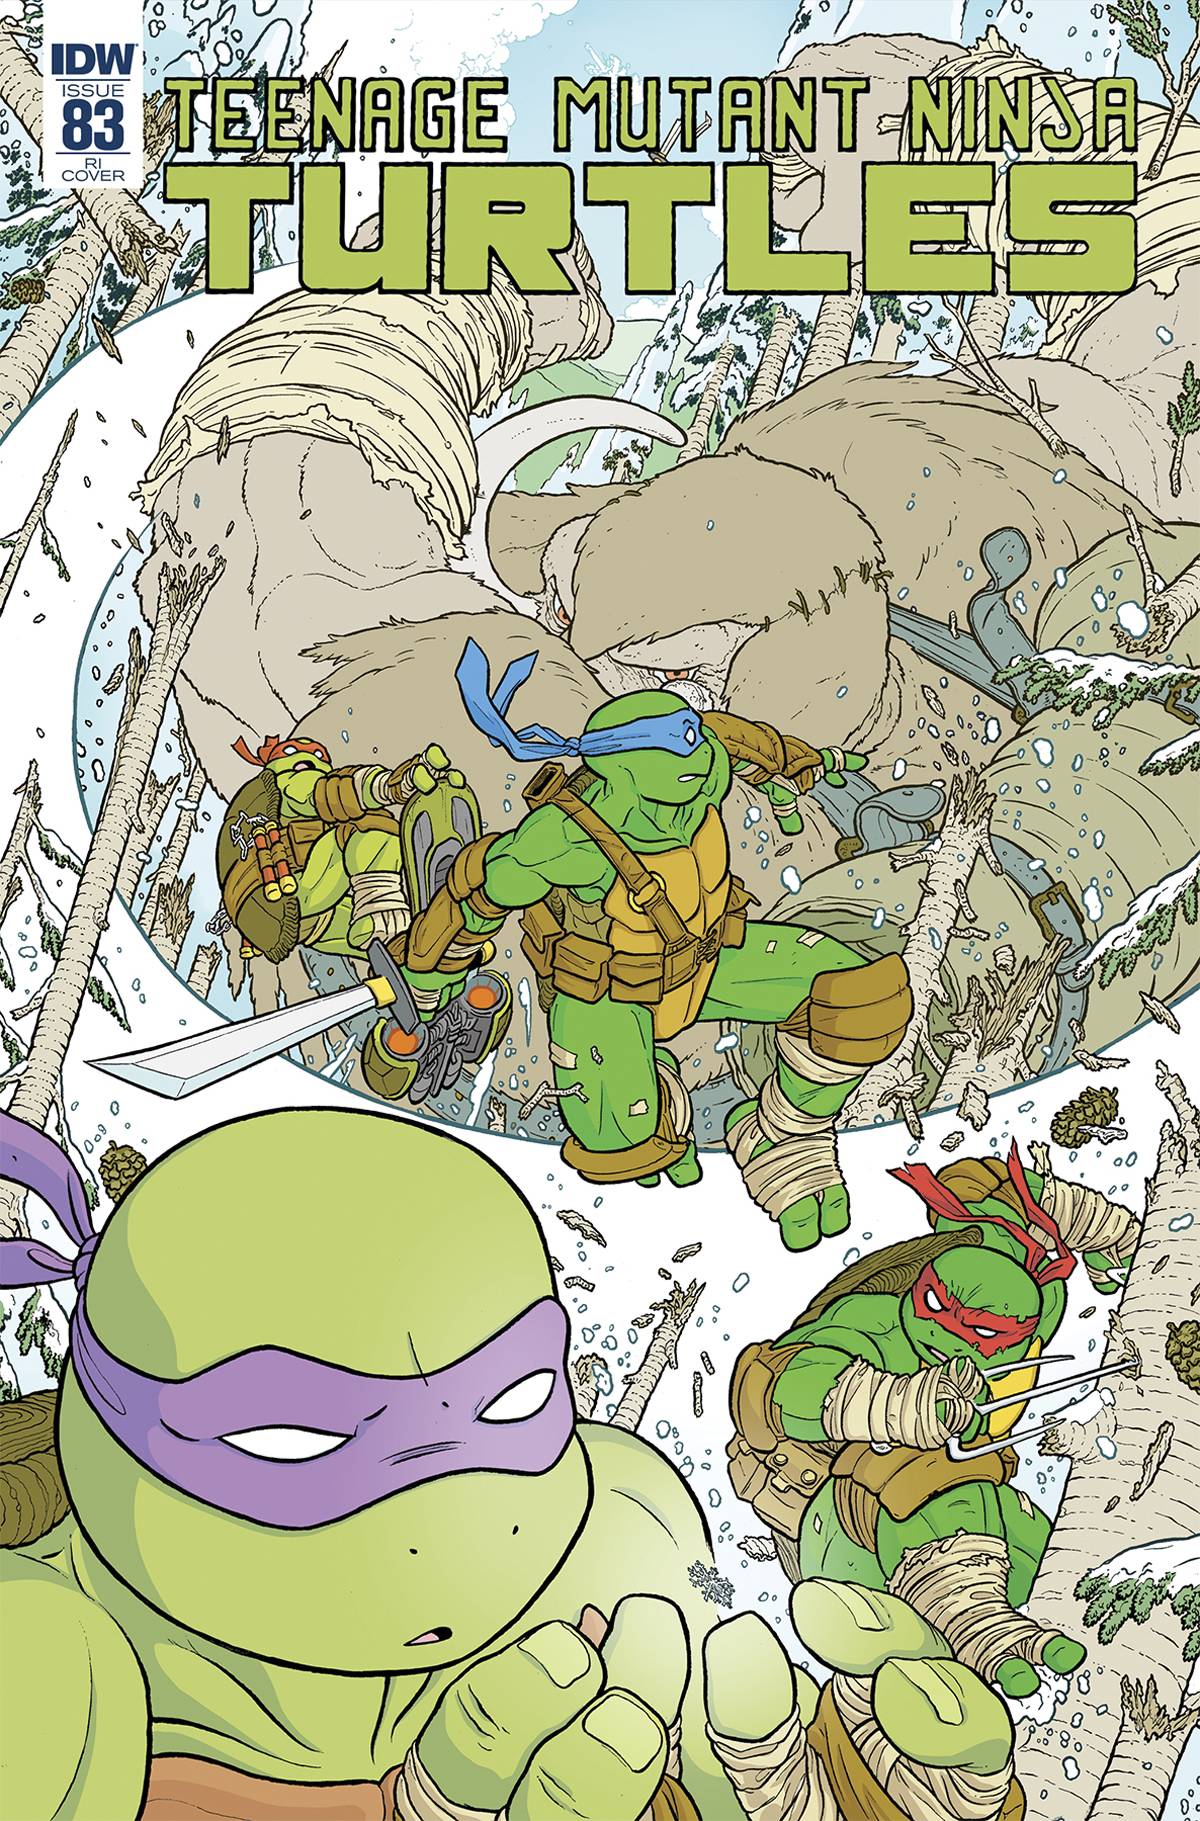 Teenage Mutant Ninja Turtles Ongoing #83 1 for 10 Incentive (2011)